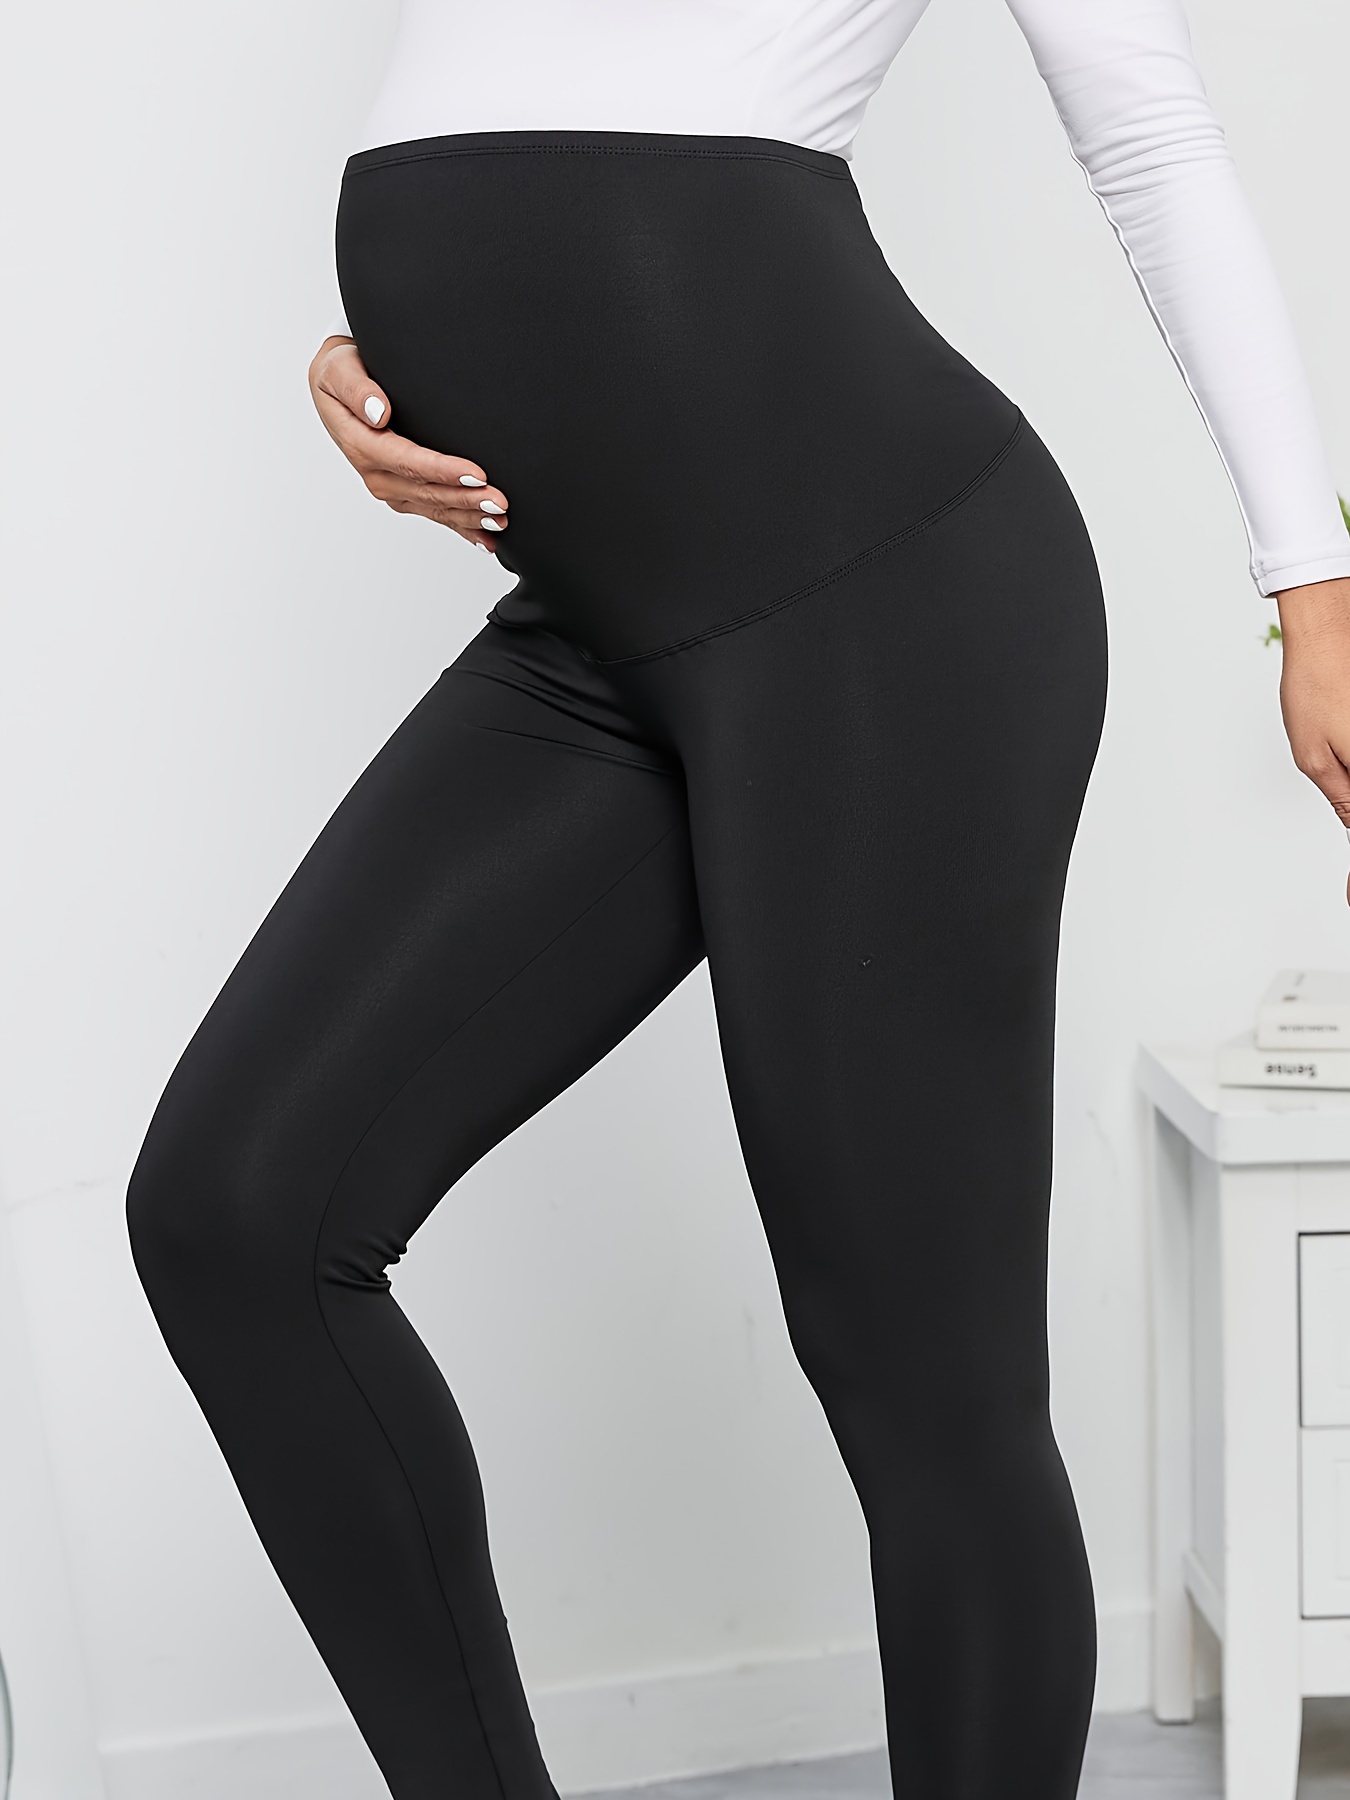 High Waist Yoga Pants Pregnancy Leggings Skinny Maternity Support Knitted  Leggins Body Shaper Trousers for Pregnant Women - AliExpress